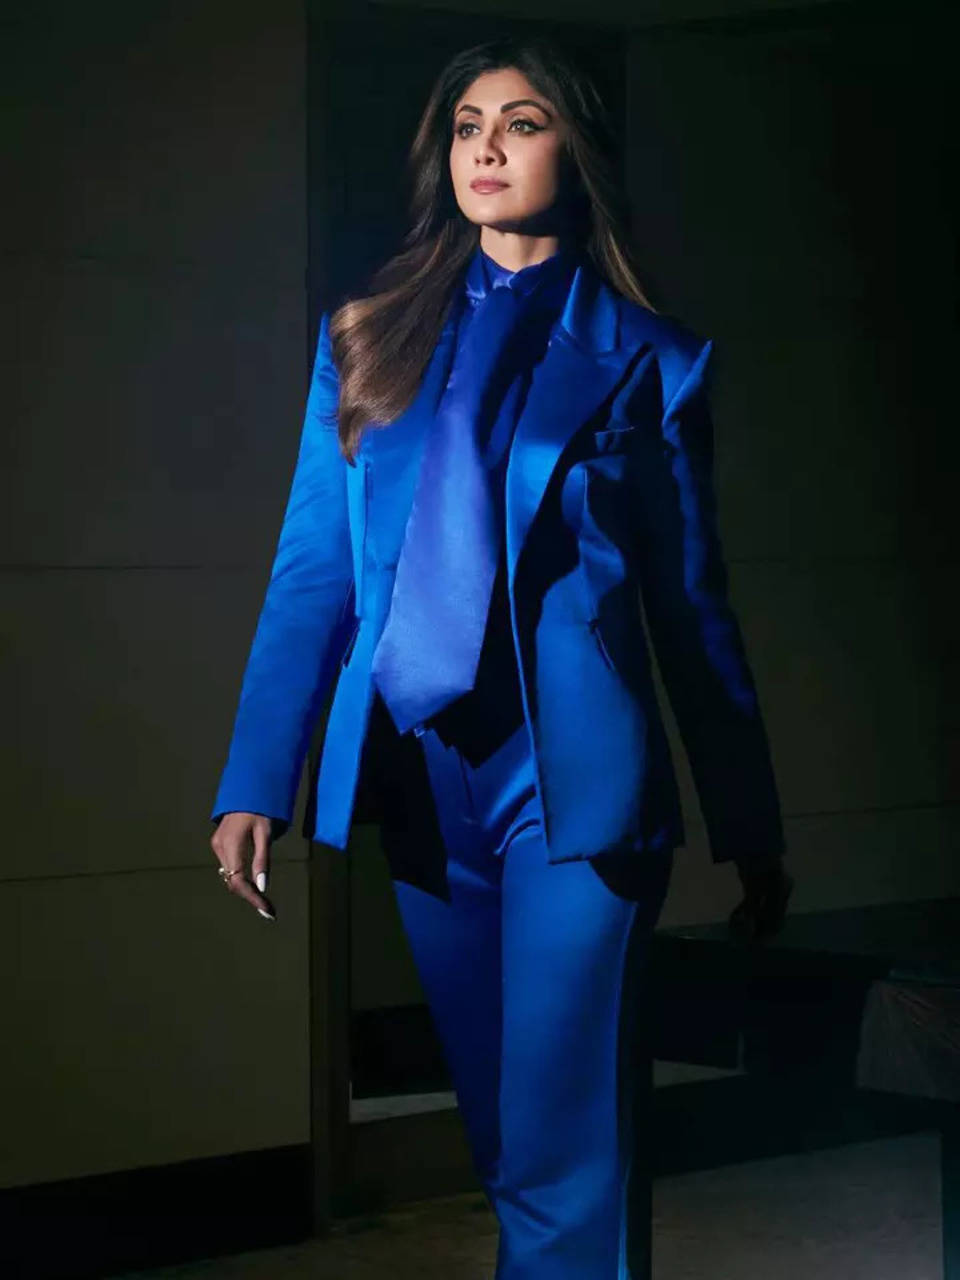 Shilpa Shetty exudes boss babe vibes in a vibrant royal blue pantsuit